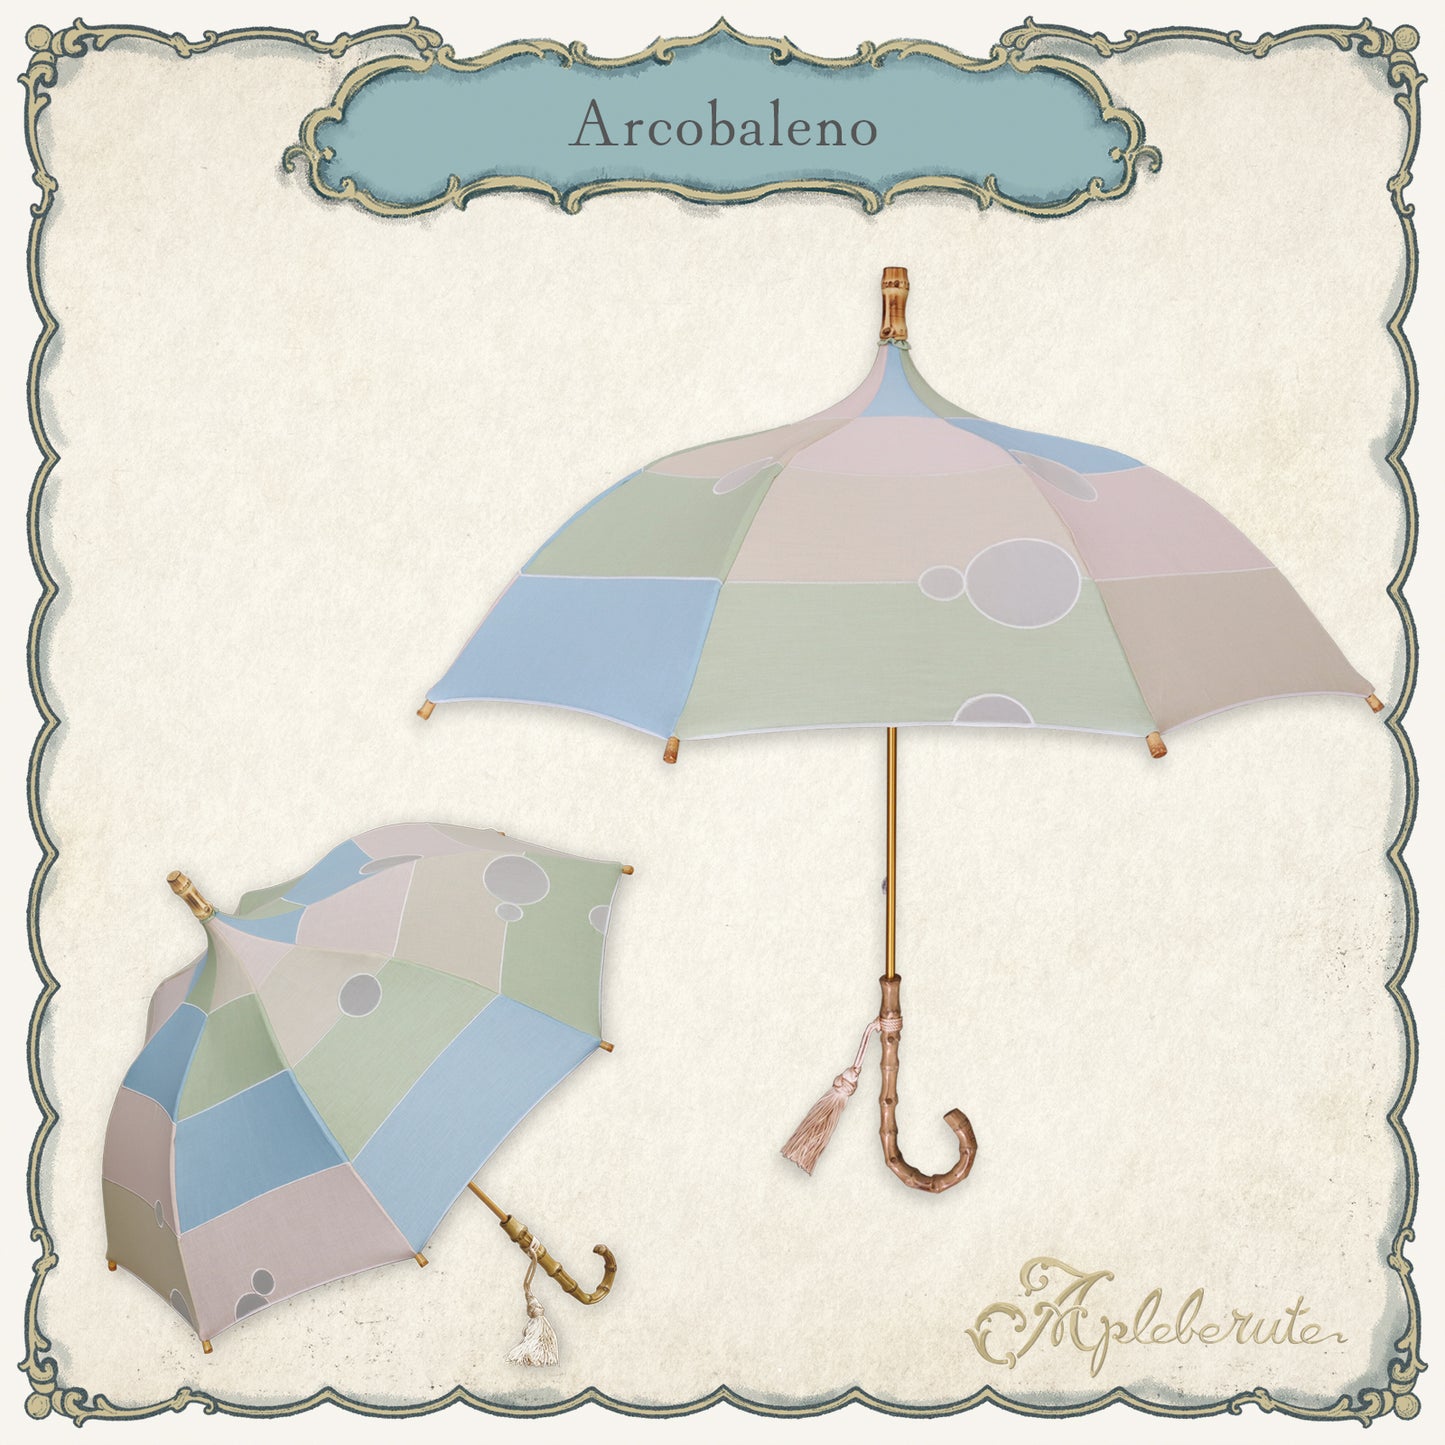 【New】arcobaleno (アルコバレーノ) - 日傘 パゴダ カラフル パステルカラー